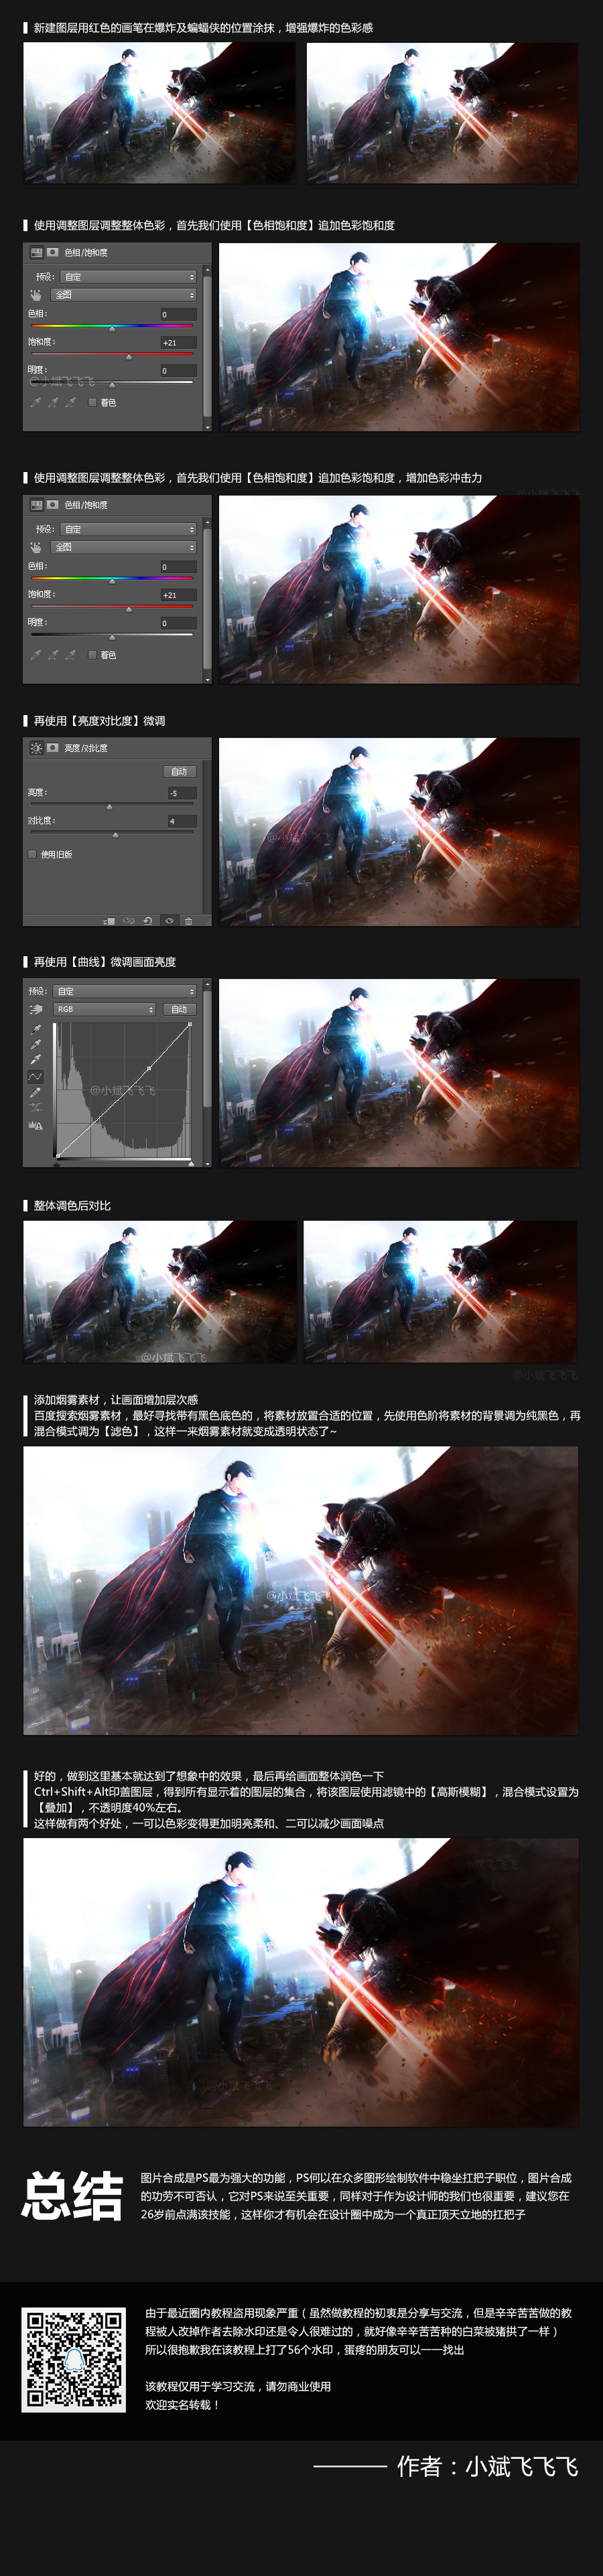 Photoshop合成超人大战蝙蝠侠场景教程